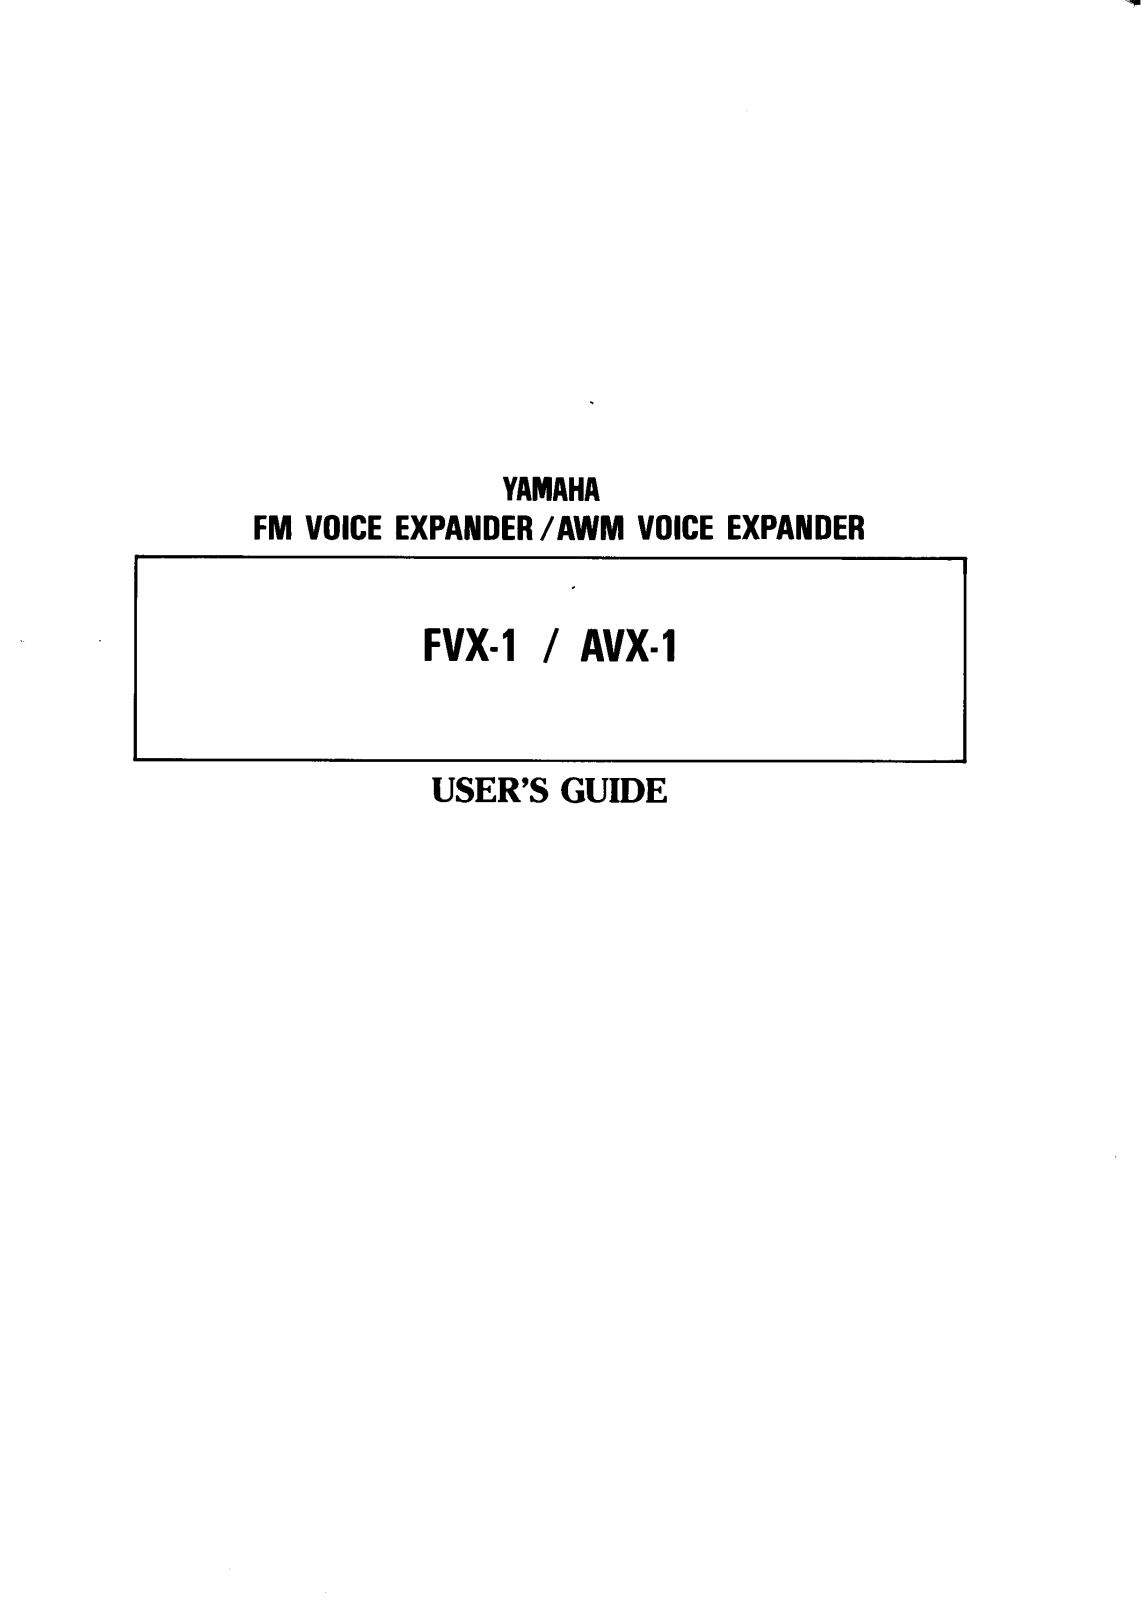 Yamaha FVX-1, AVX-1 Owner's Manual